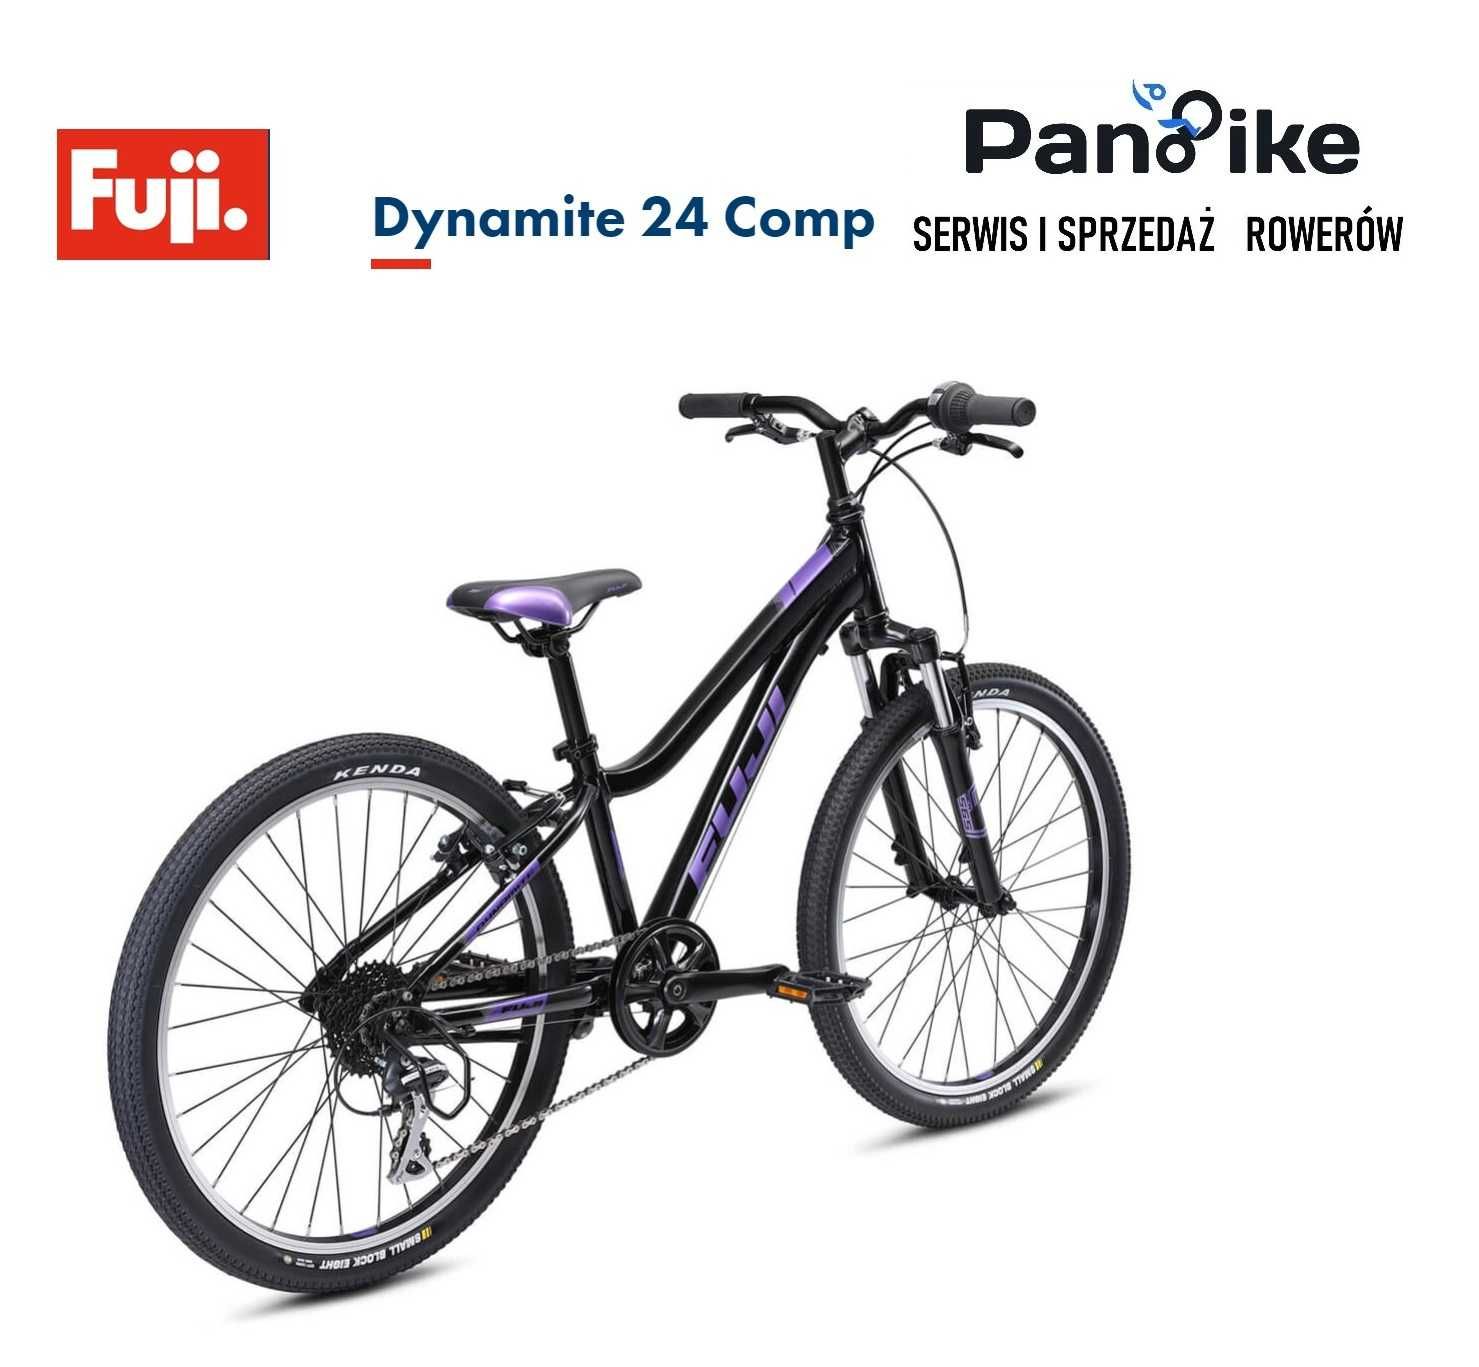 Rower Fuji Dynamite 24 Comp promocja